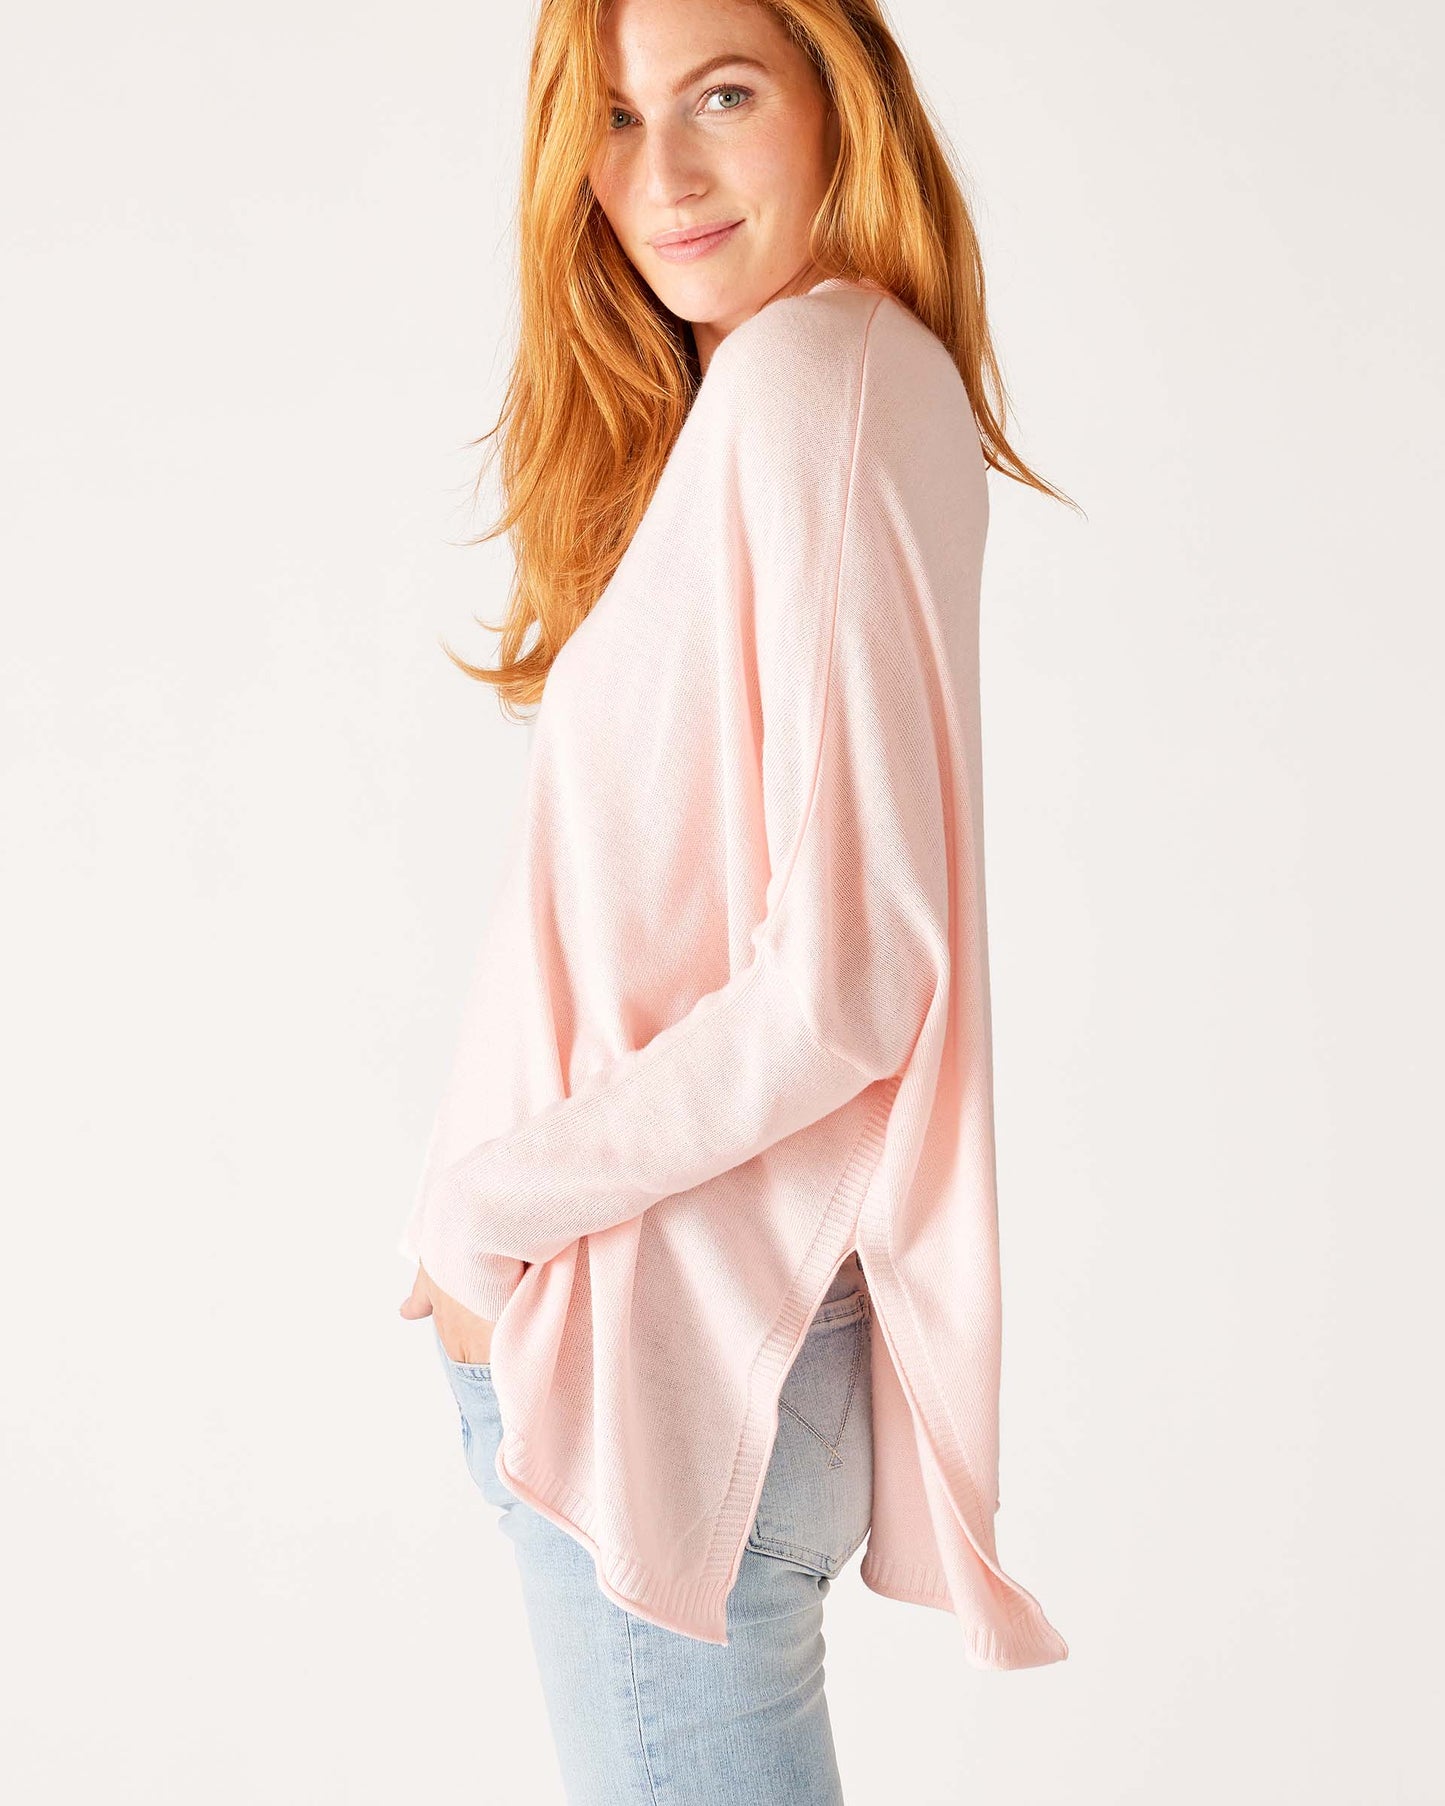 Catalina V-Neck Sweater in Sorbet Pink